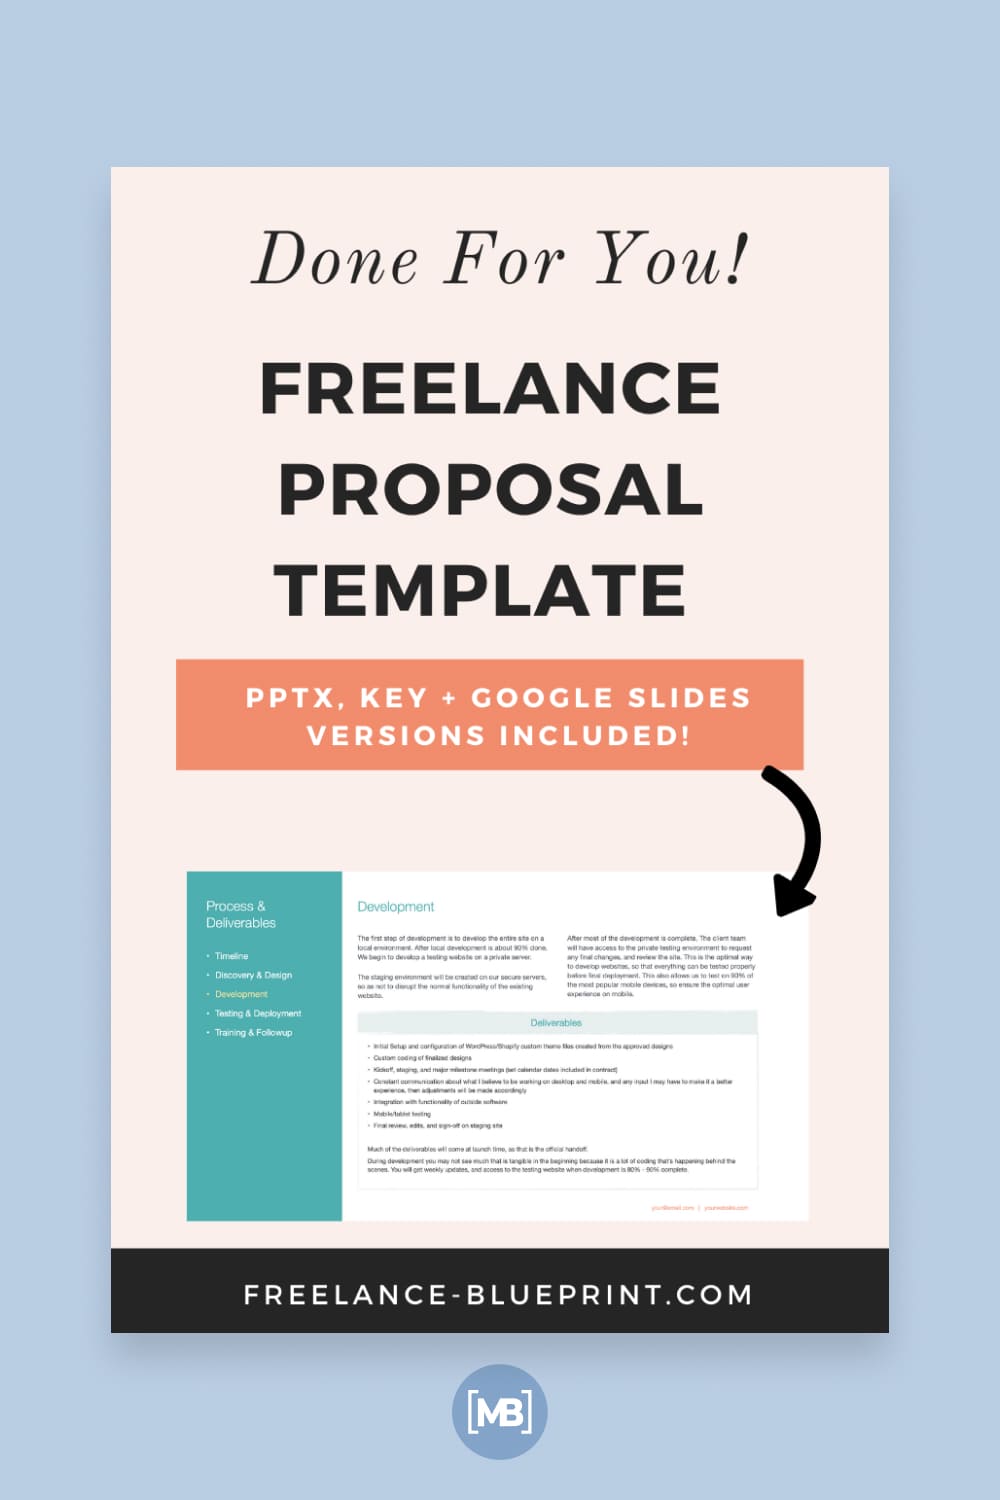 Freelance proposal template.